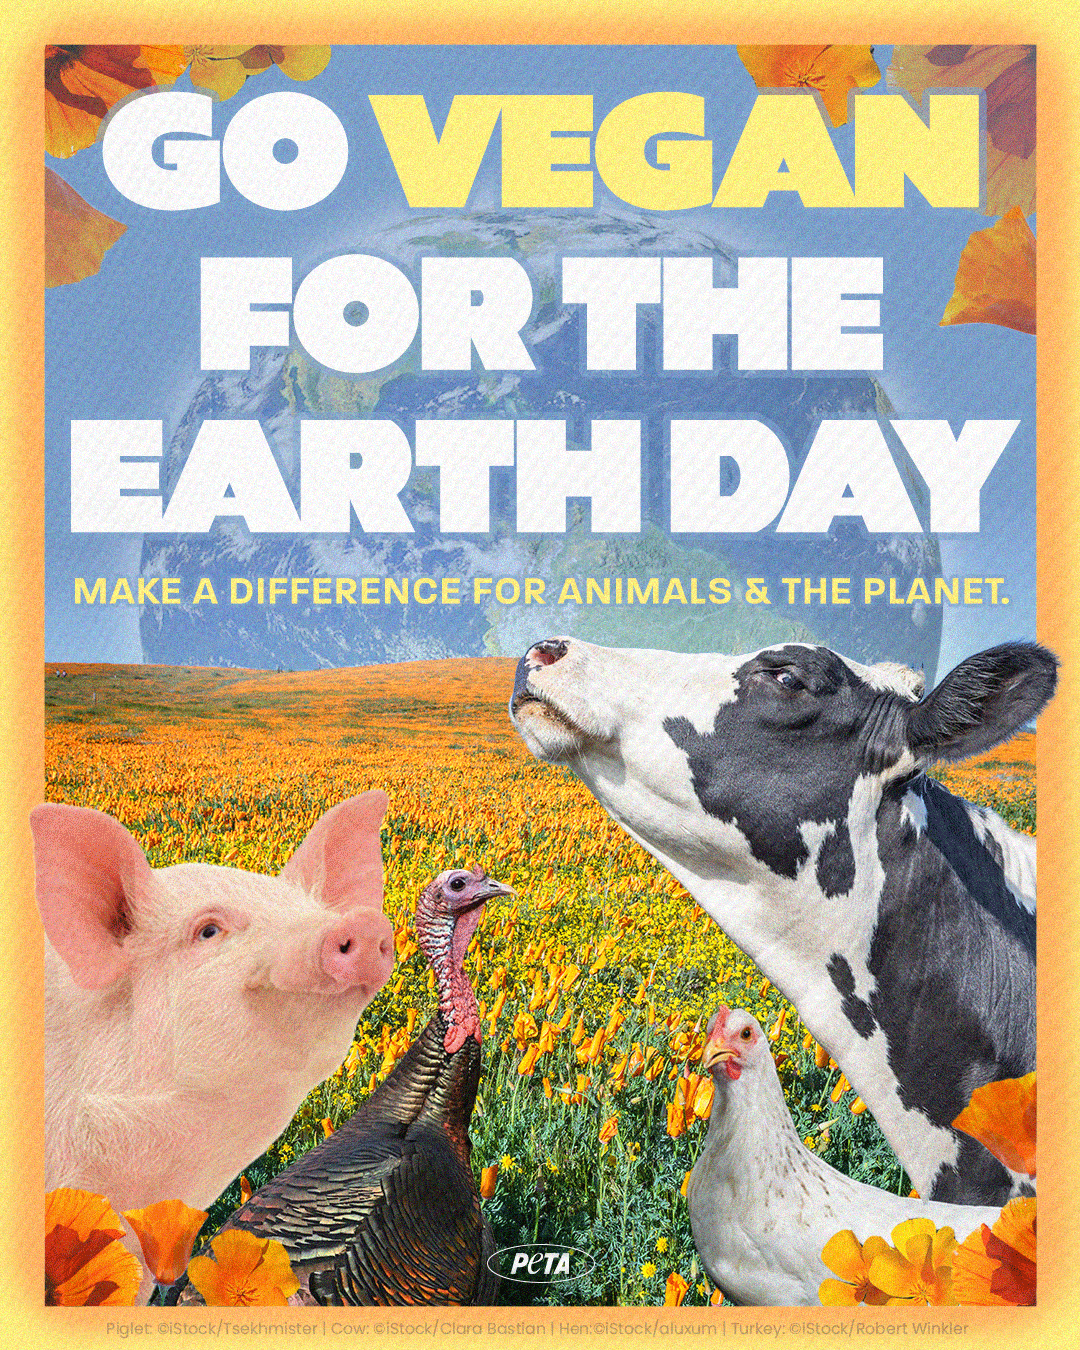 Vegan for the environment / planet